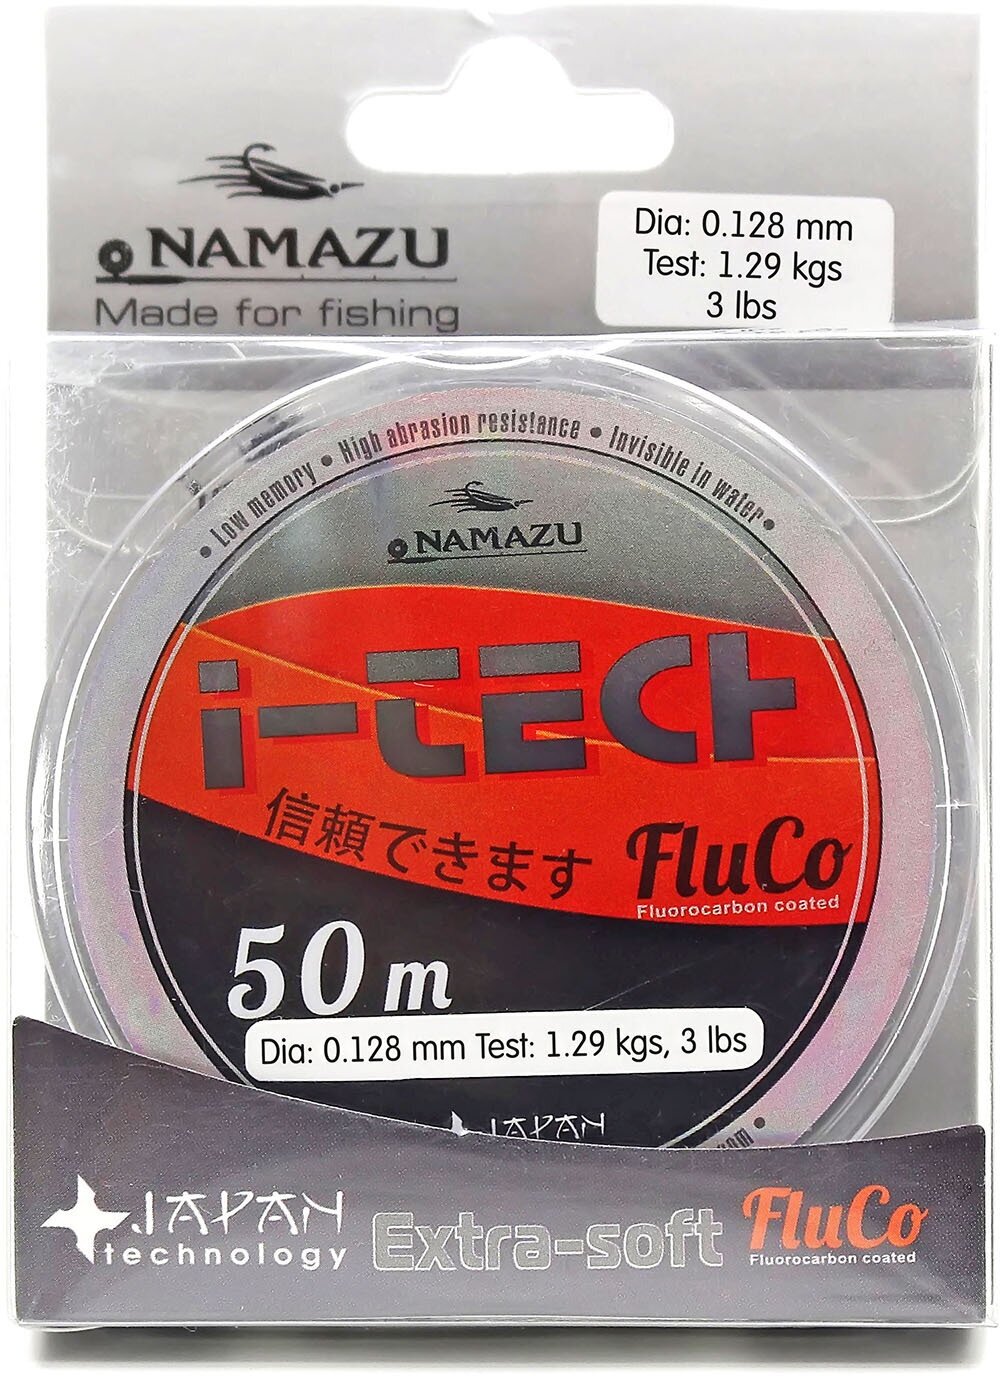 Леска Namazu "I-Tech Fluco" L-50 м d-0128 мм test-129 кг прозрачная/10/400/